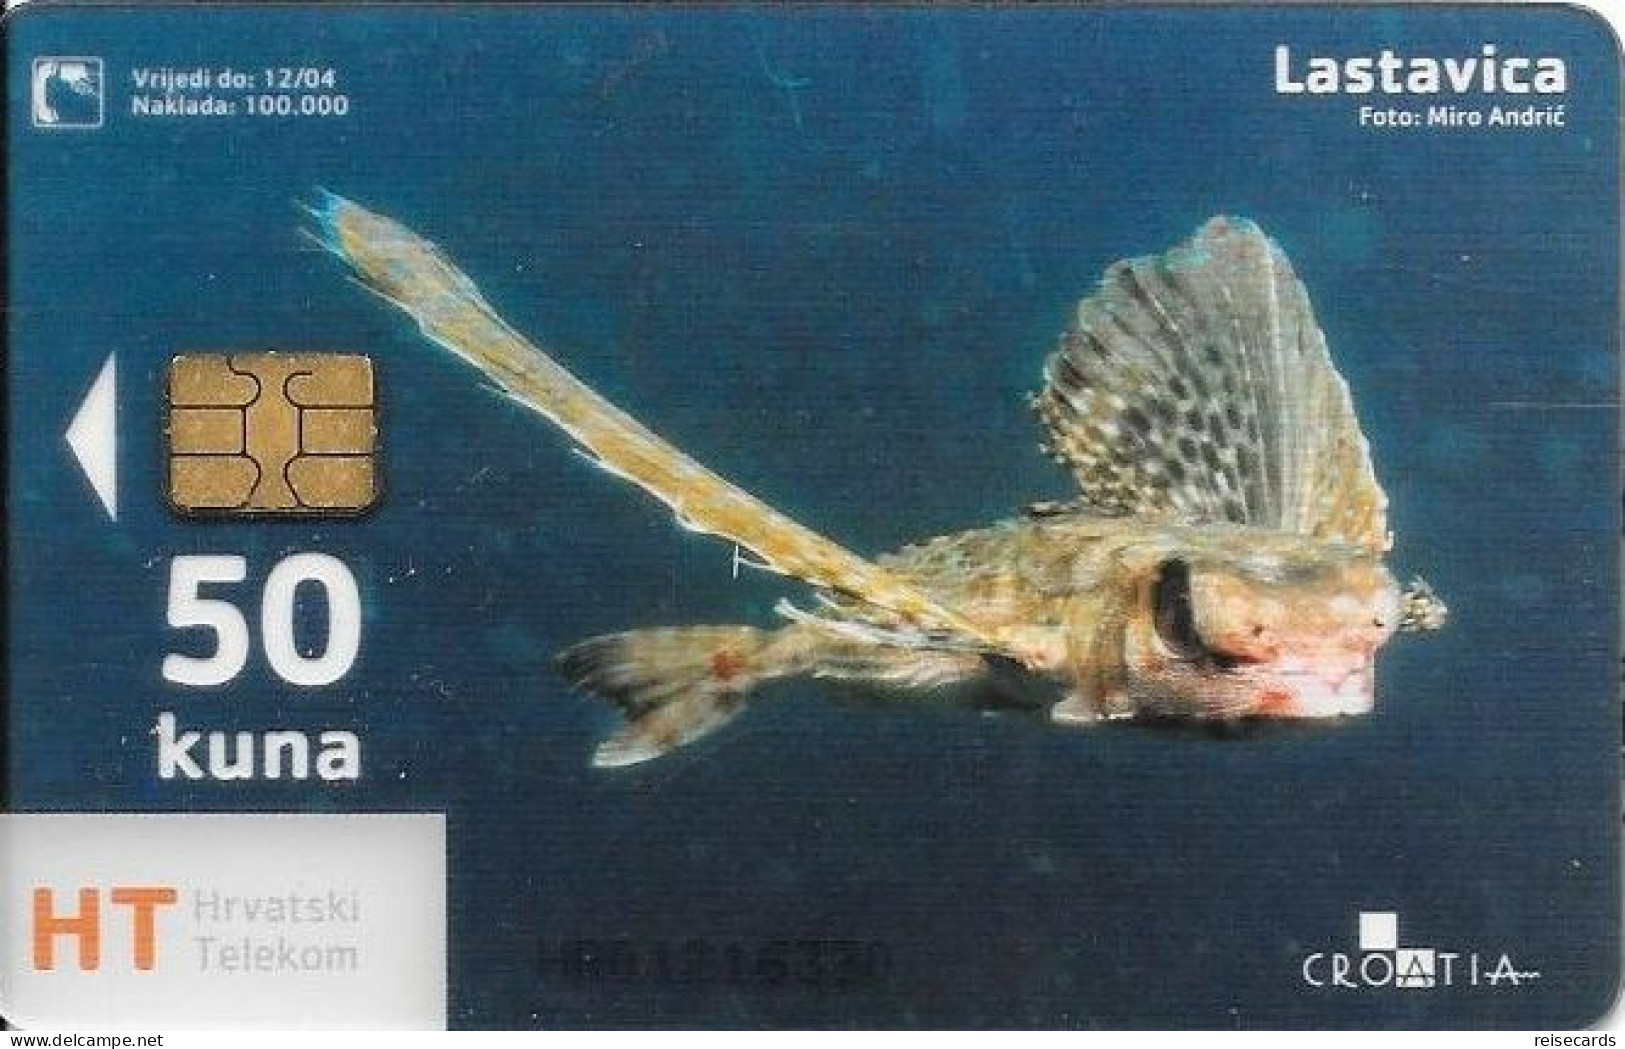 Croatia: Hrvatski Telekom - Underwater World, Lastavica. Transparent - Kroatien